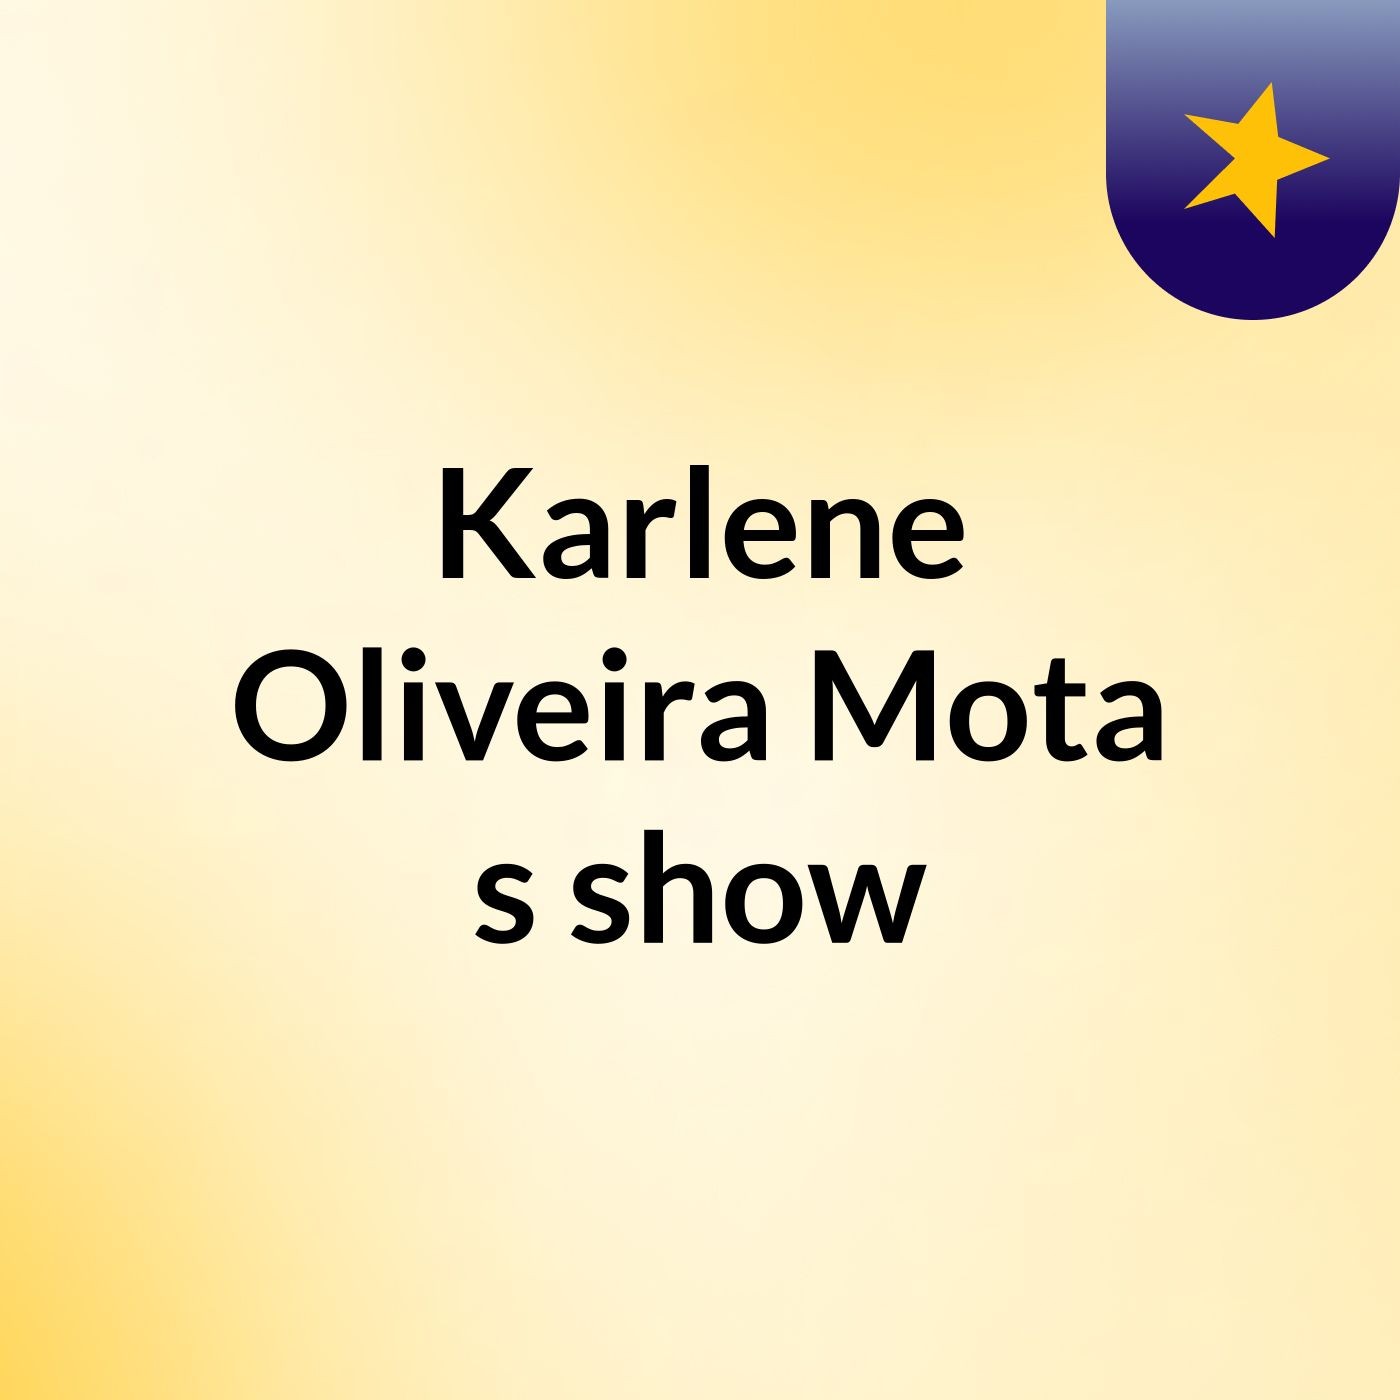 Karlene Oliveira Mota's show